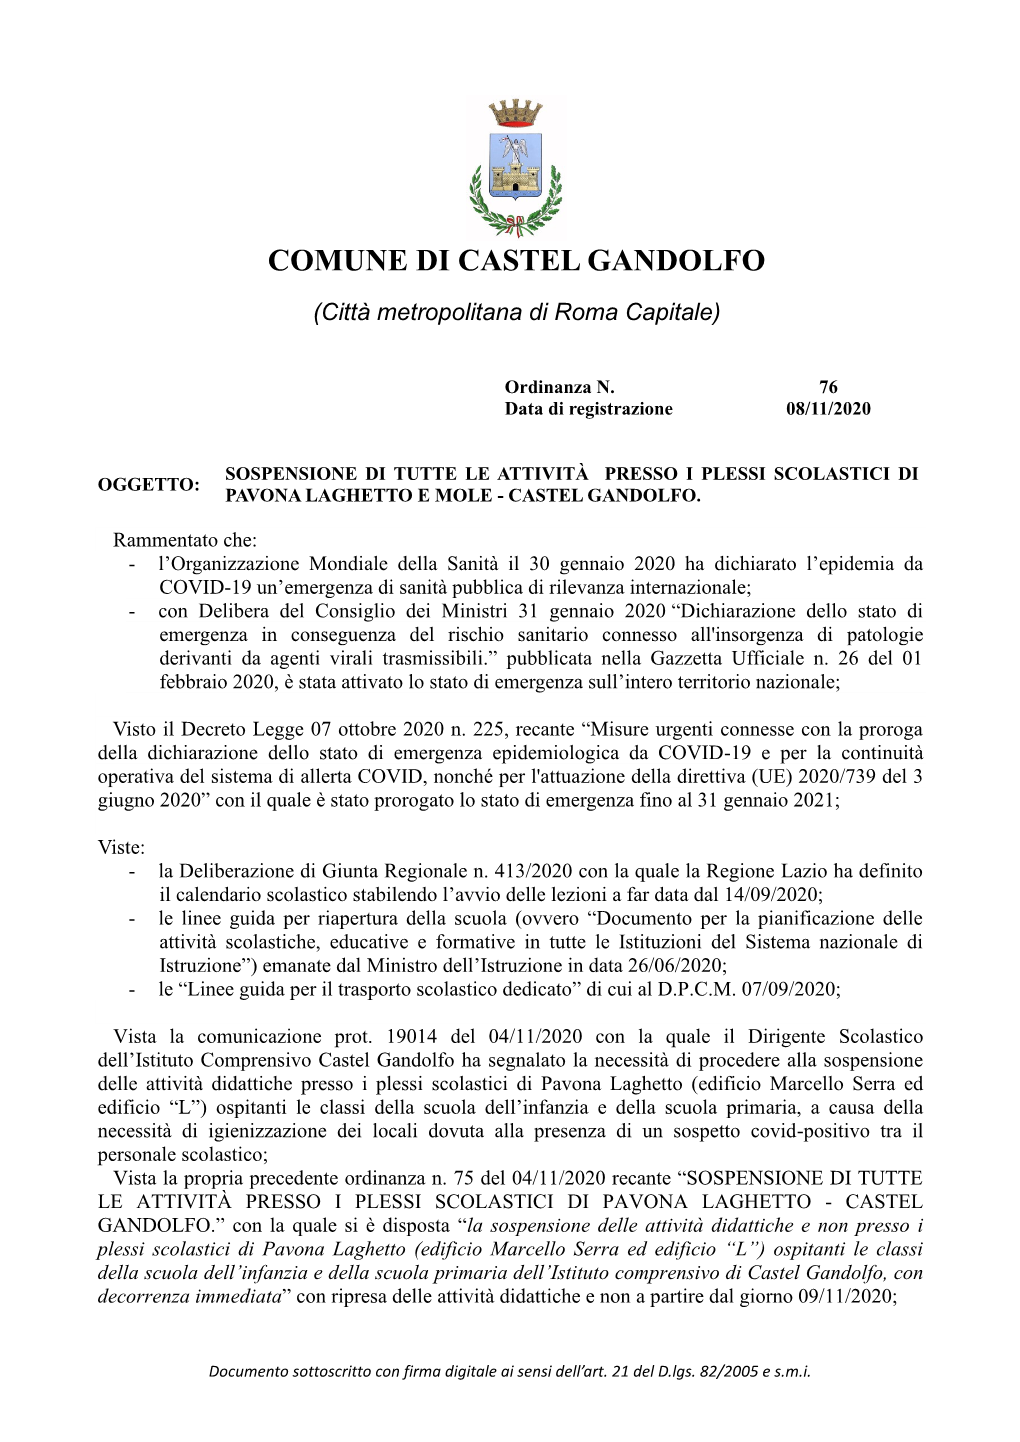 COMUNE DI CASTEL GANDOLFO (Città Metropolitana Di Roma Capitale)